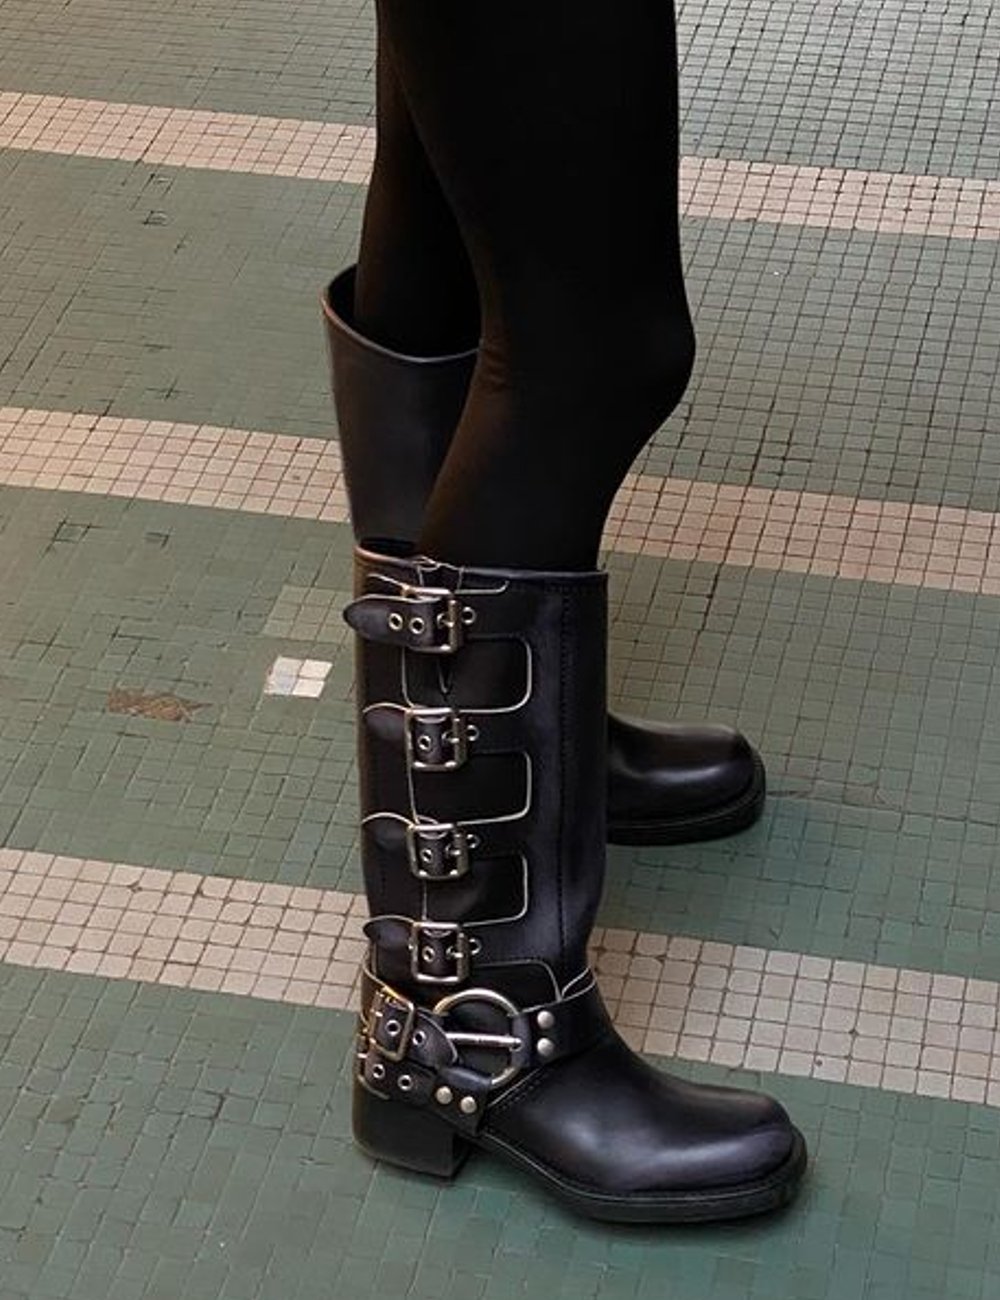 Courney Trop - limpar sapato de couro - limpar sapato de couro - inverno - street style - https://stealthelook.com.br